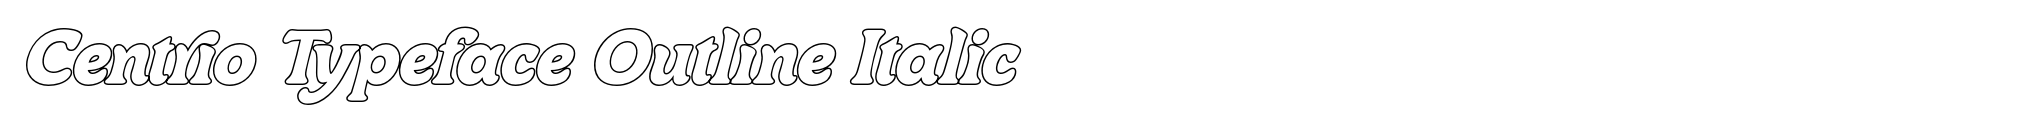 Centrio Typeface Outline Italic image